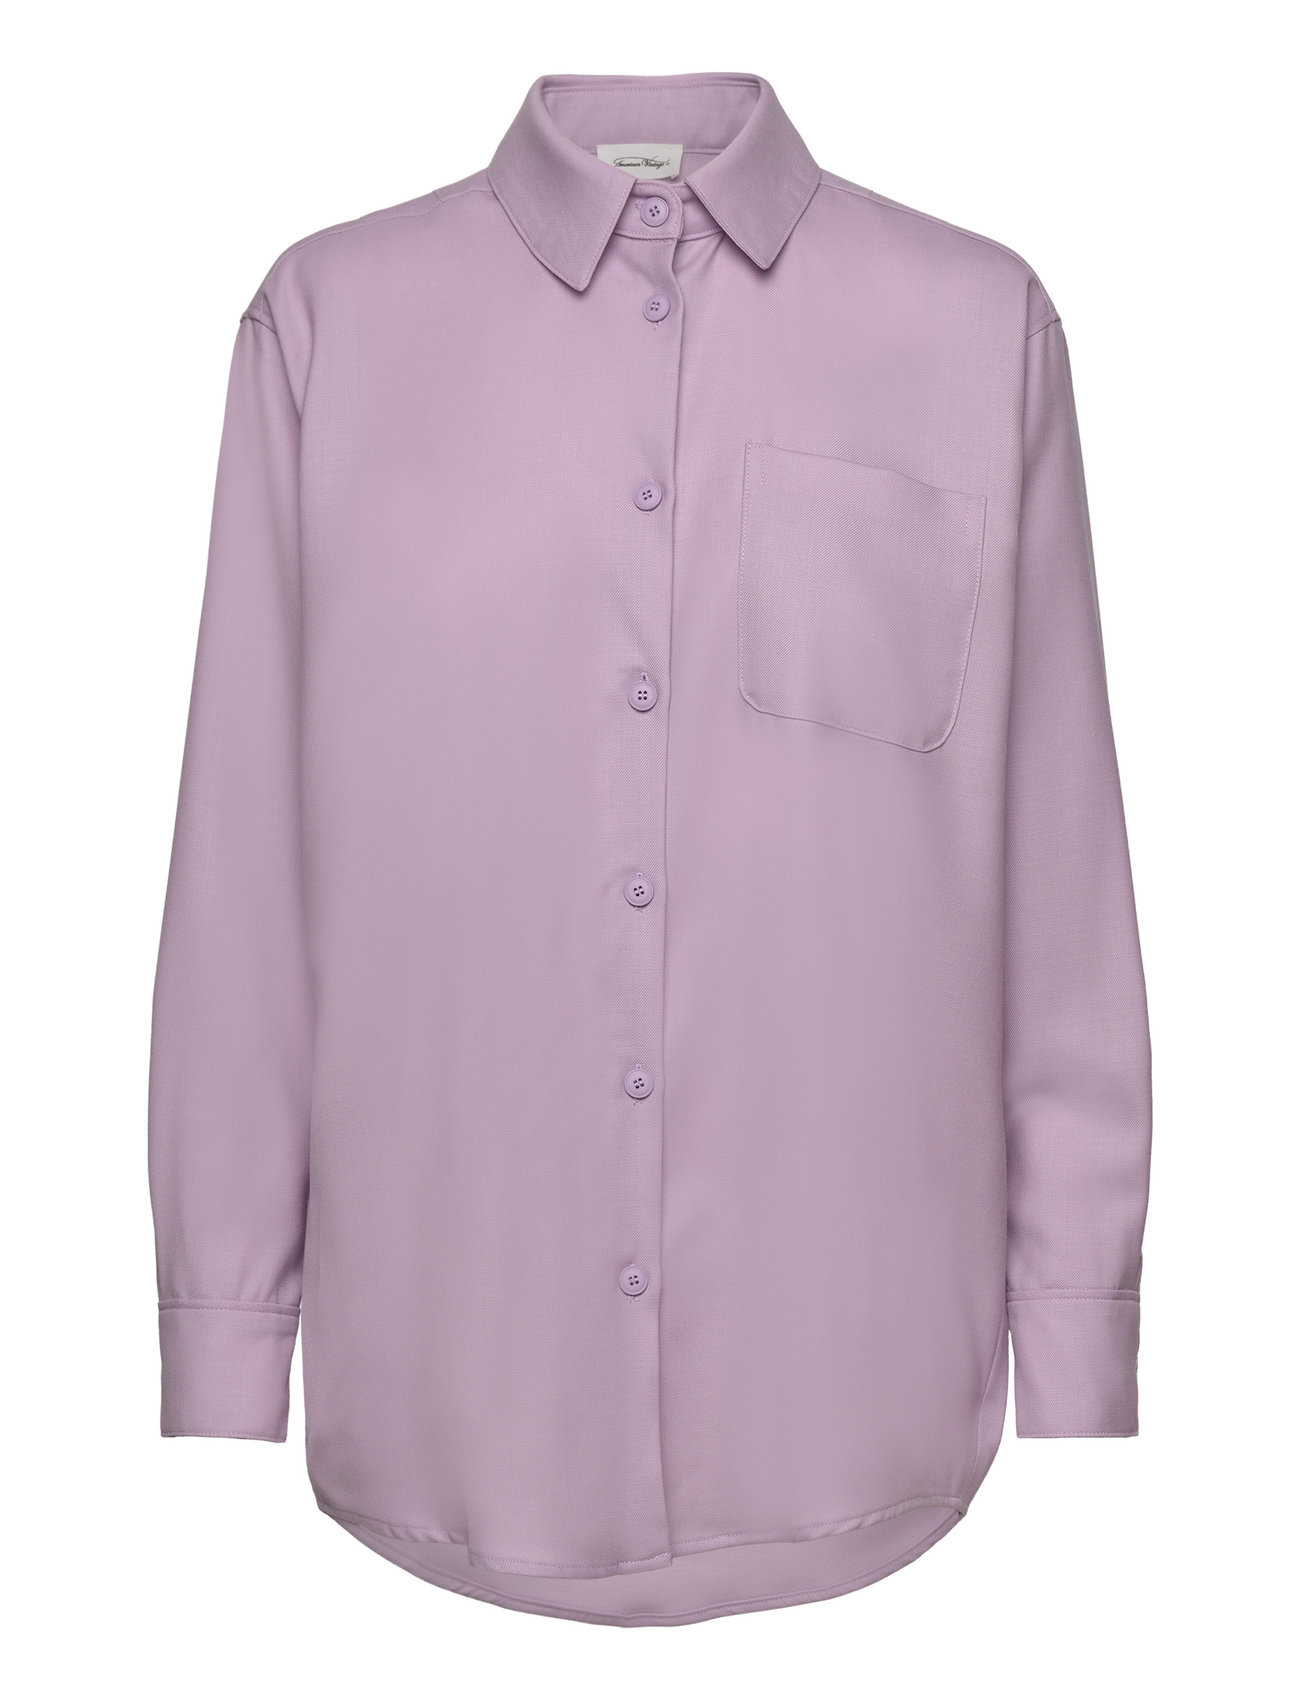 Tabinsville Tops Shirts Long-sleeved Purple American Vintage